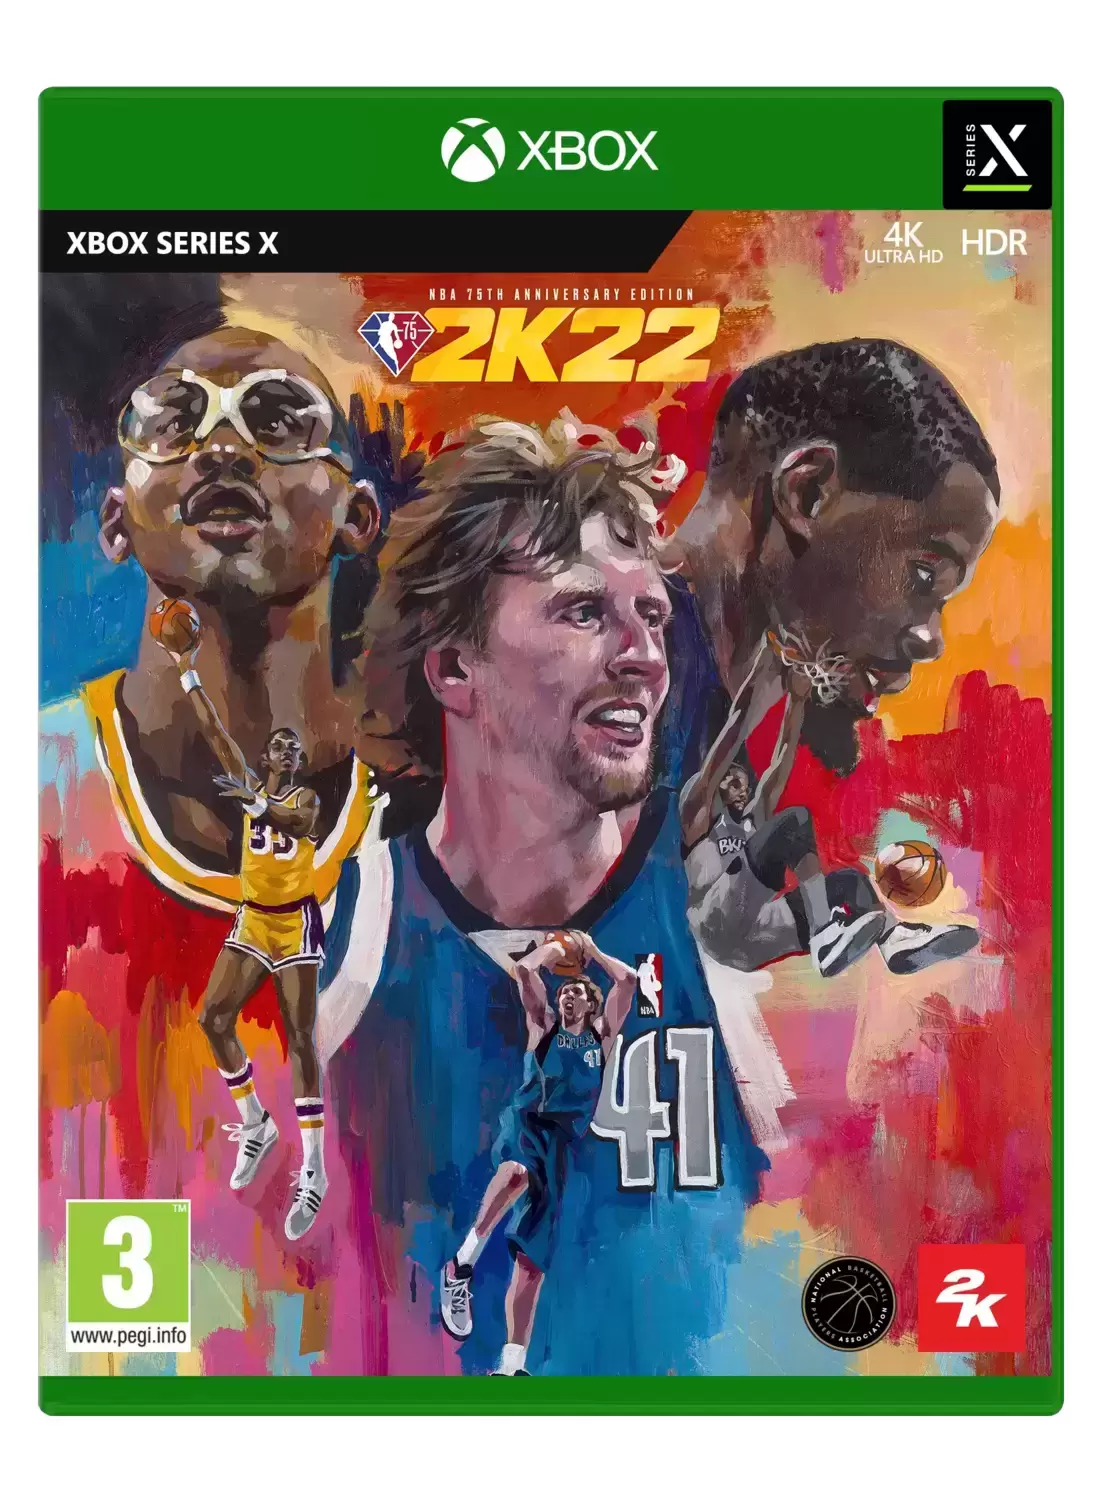 XBOX Series X Games - NBA 2K22 - 75th Anniversary Edition